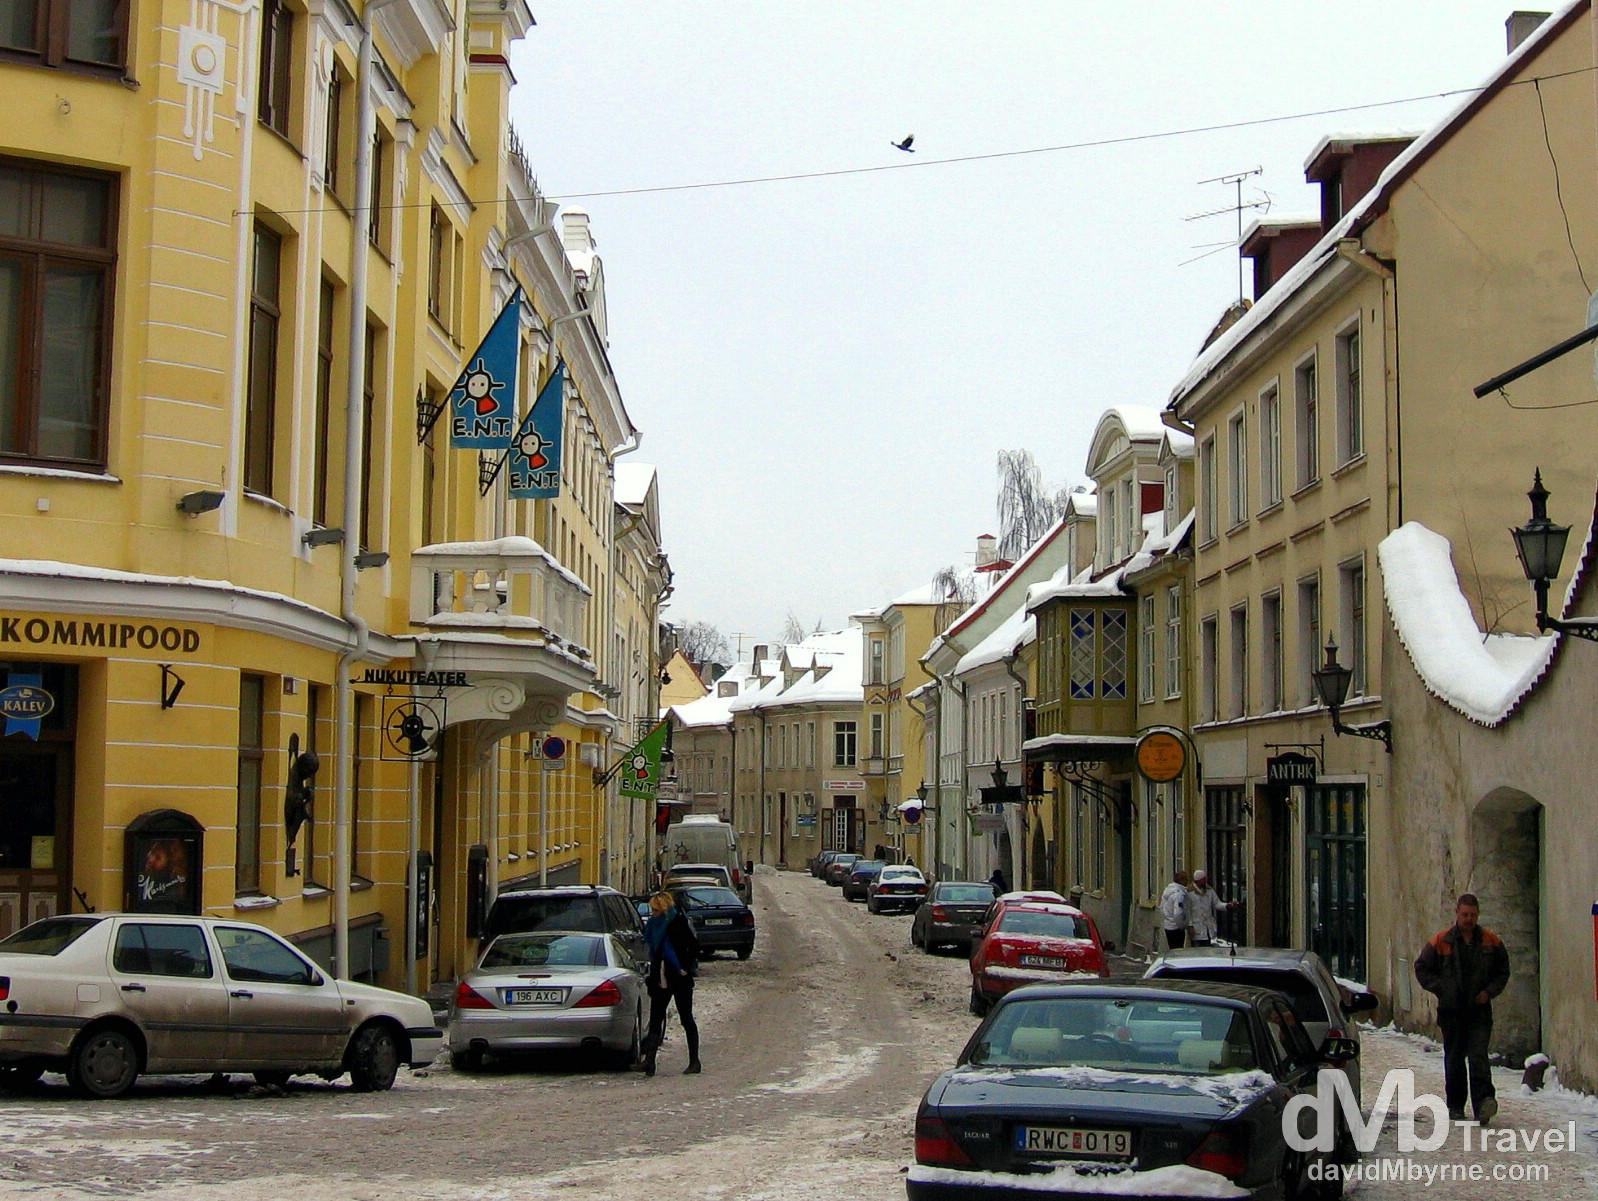 On the streets of Old Town, Tallinn, Estonia. March 2, 2006. 